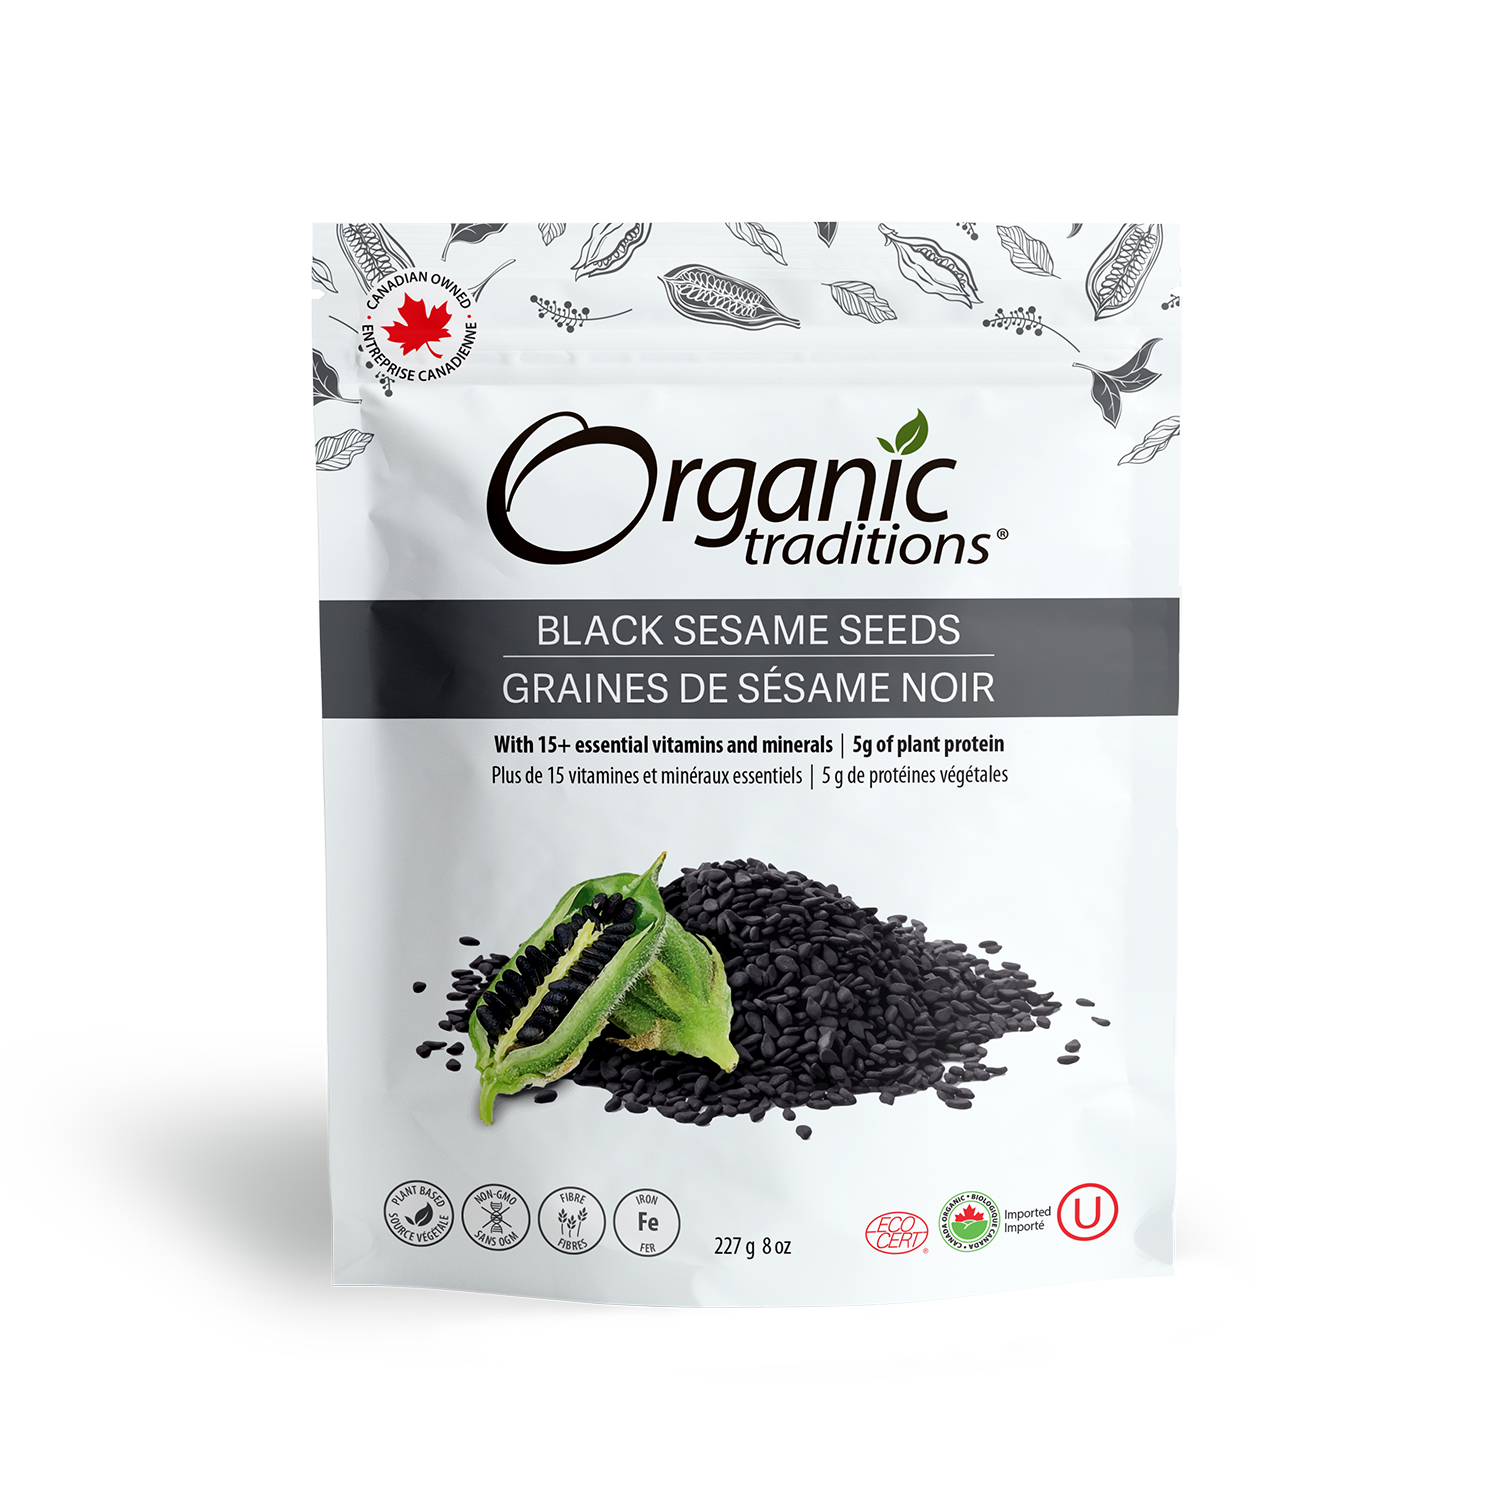 organic traditions black sesame seeds 227g front of bag image